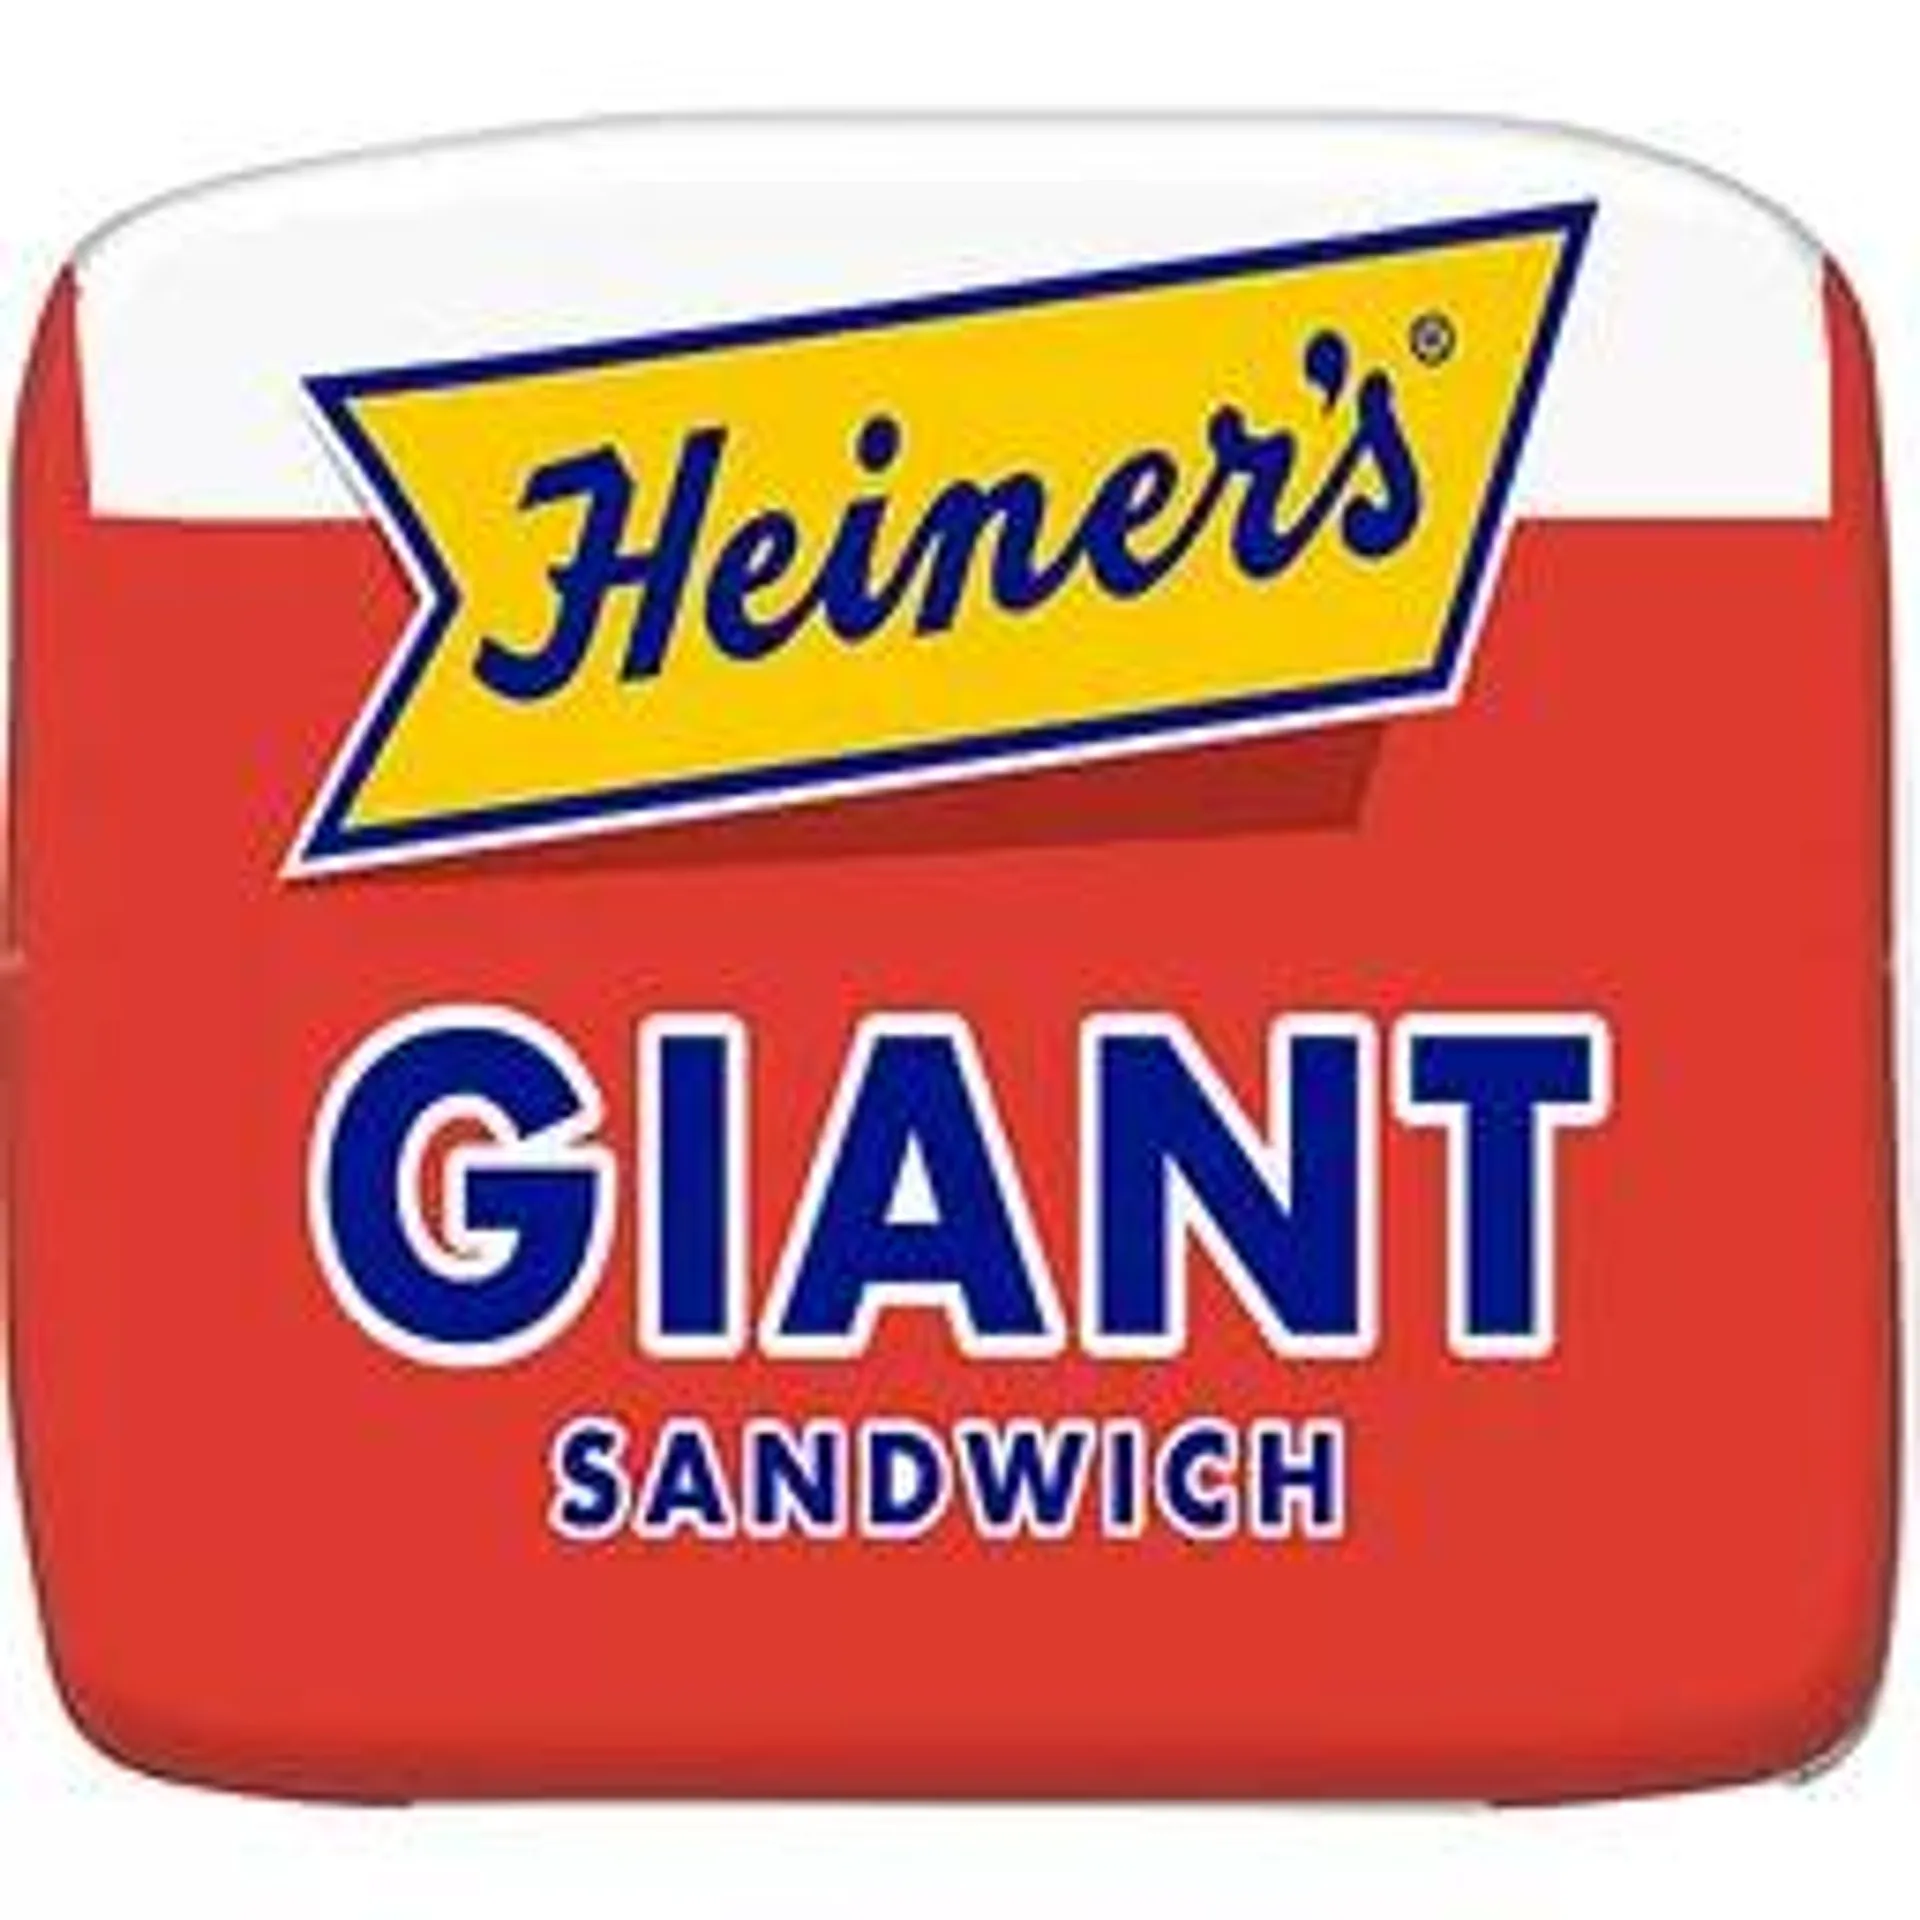 Heiner's Bread, Enriched, Sandwich, Giant 24 Oz